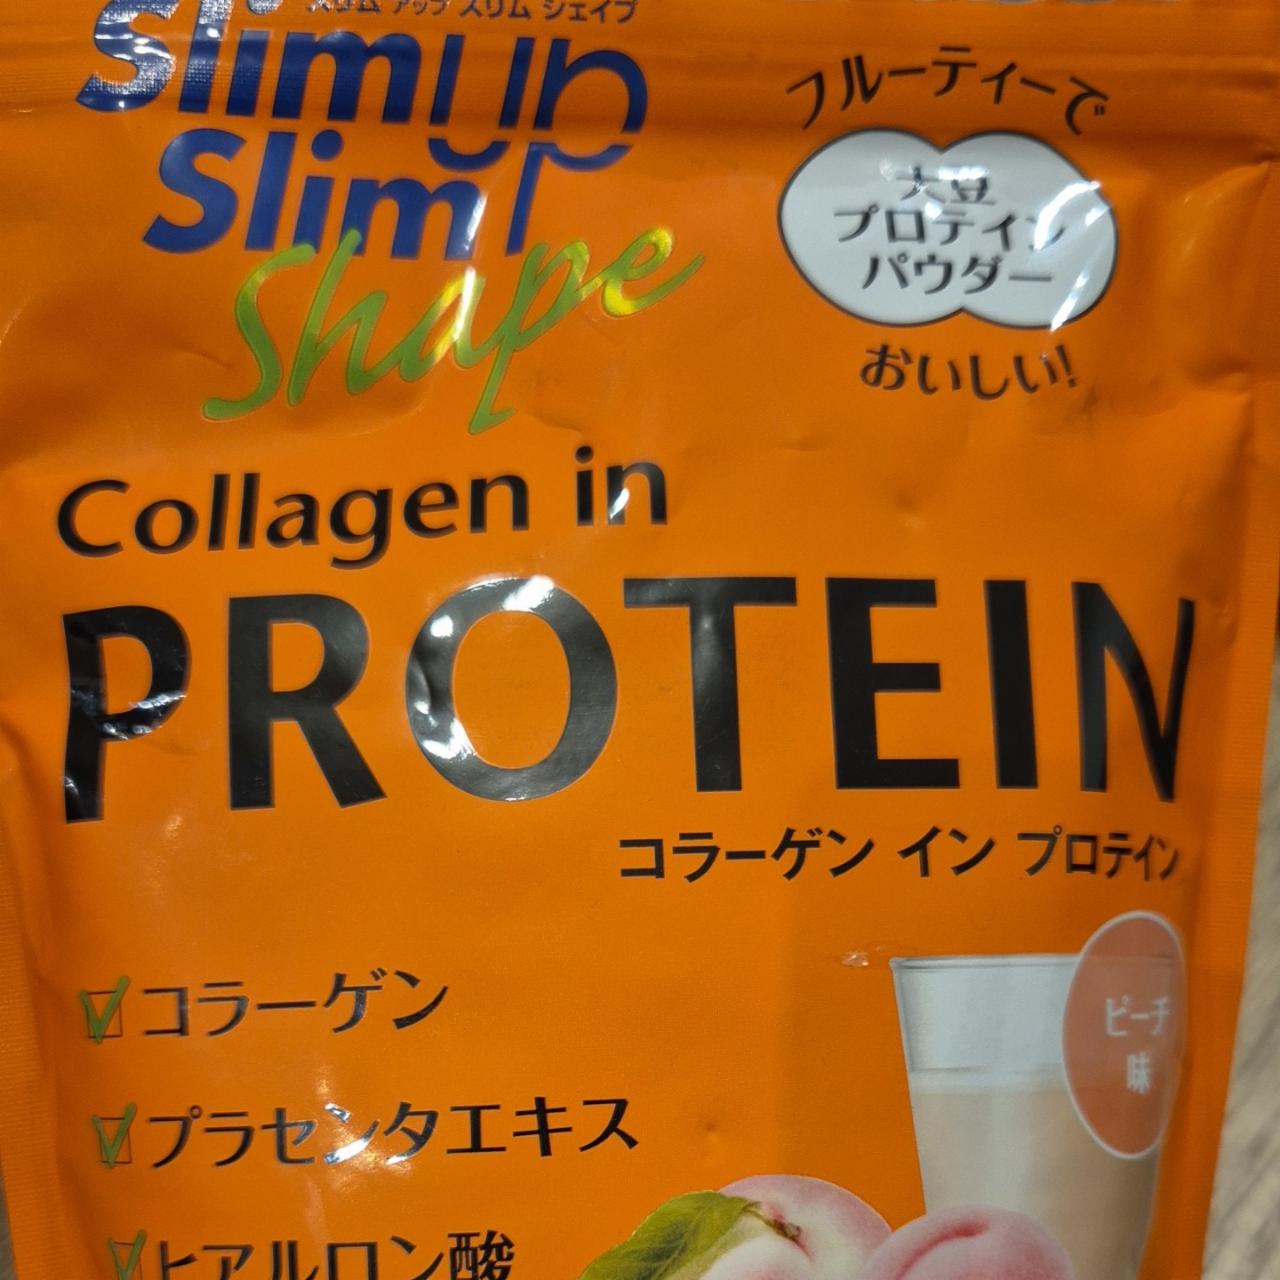 Fotografie - Slim Up Slim Shape Collagen in Protein Asahi